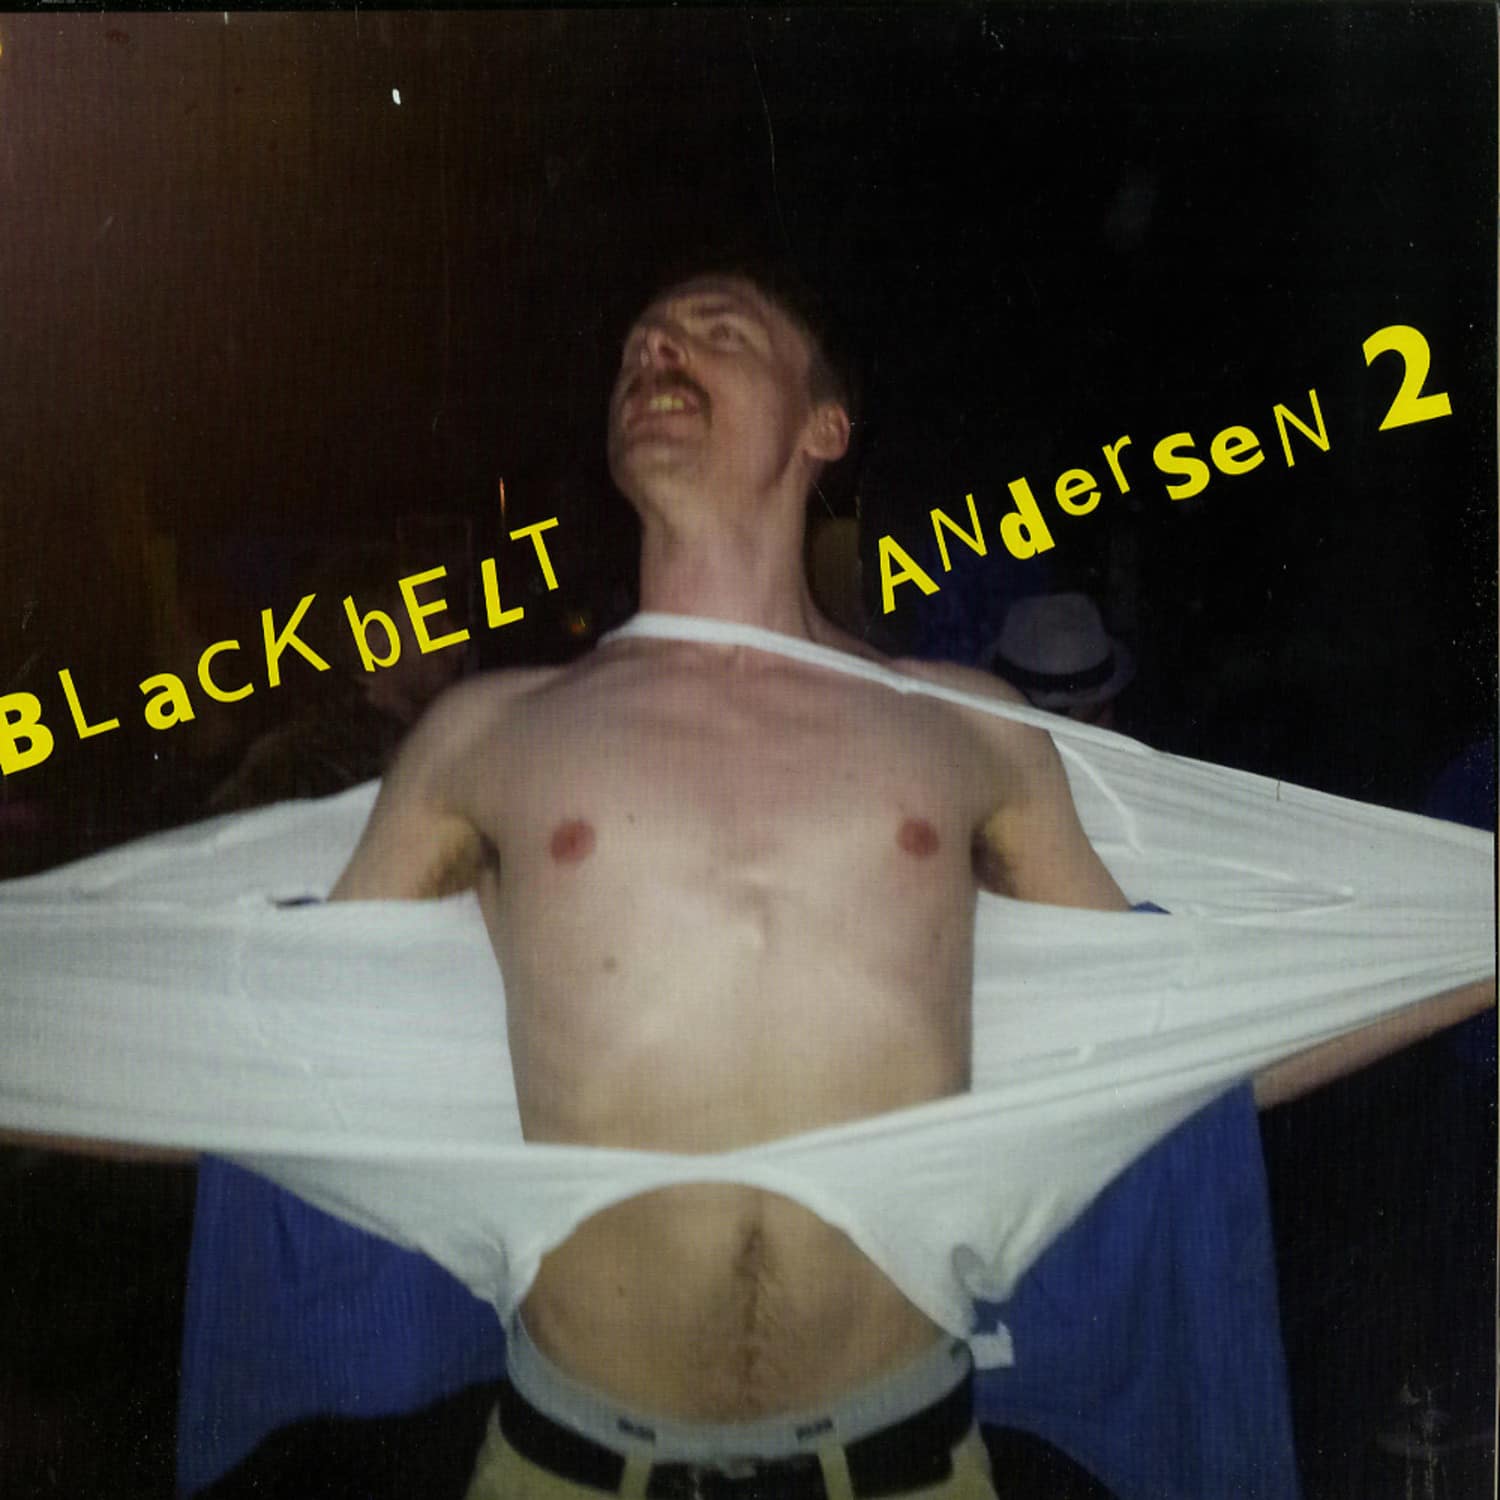 Blackbelt Andersen - BLACKBELT ANDERSEN 2 